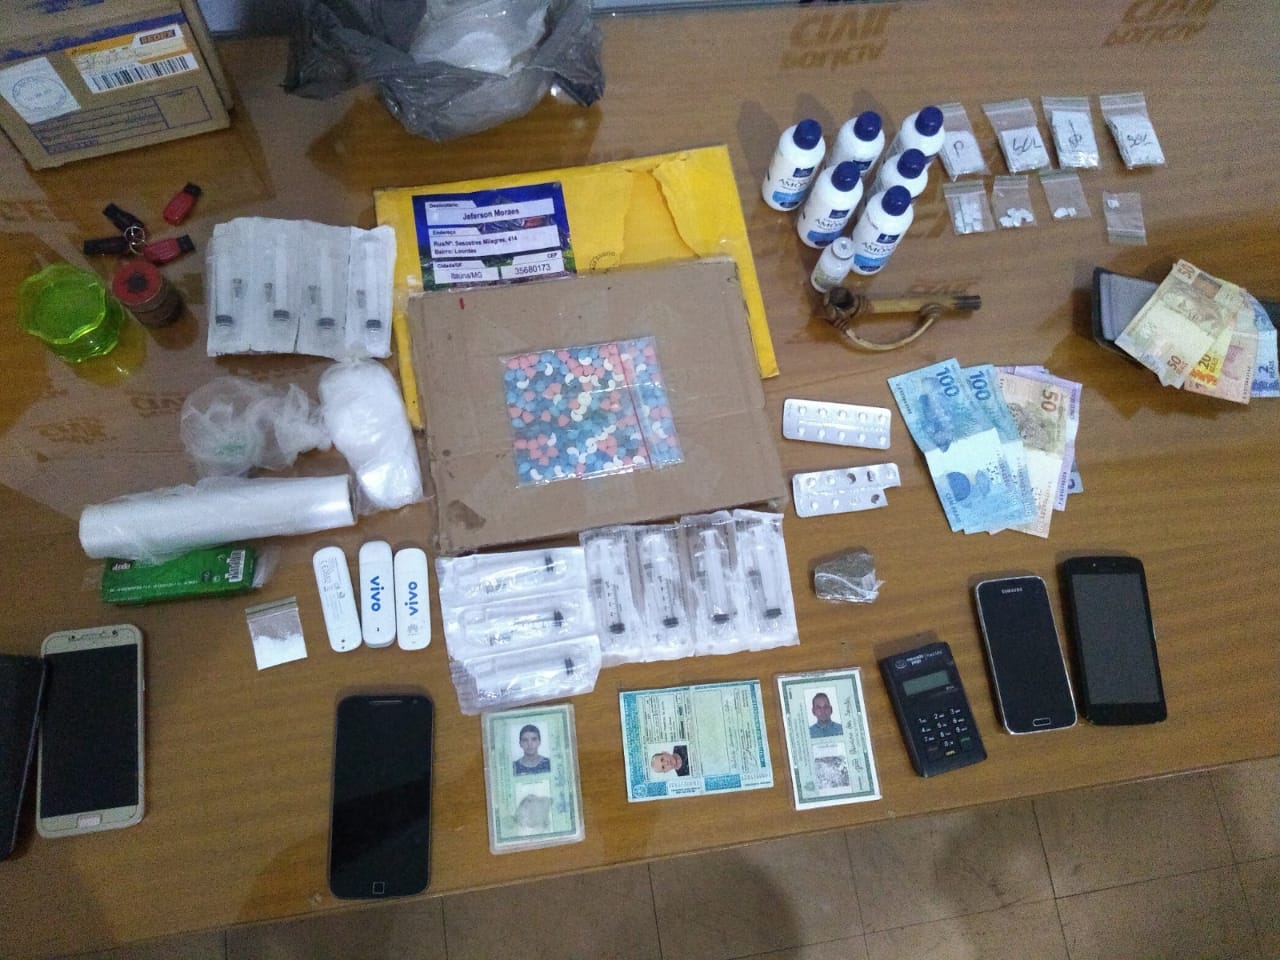 Polícia Civil desbarata laboratório de drogas no bairro de Lourdes e apreende 500 comprimidos de ecstasy